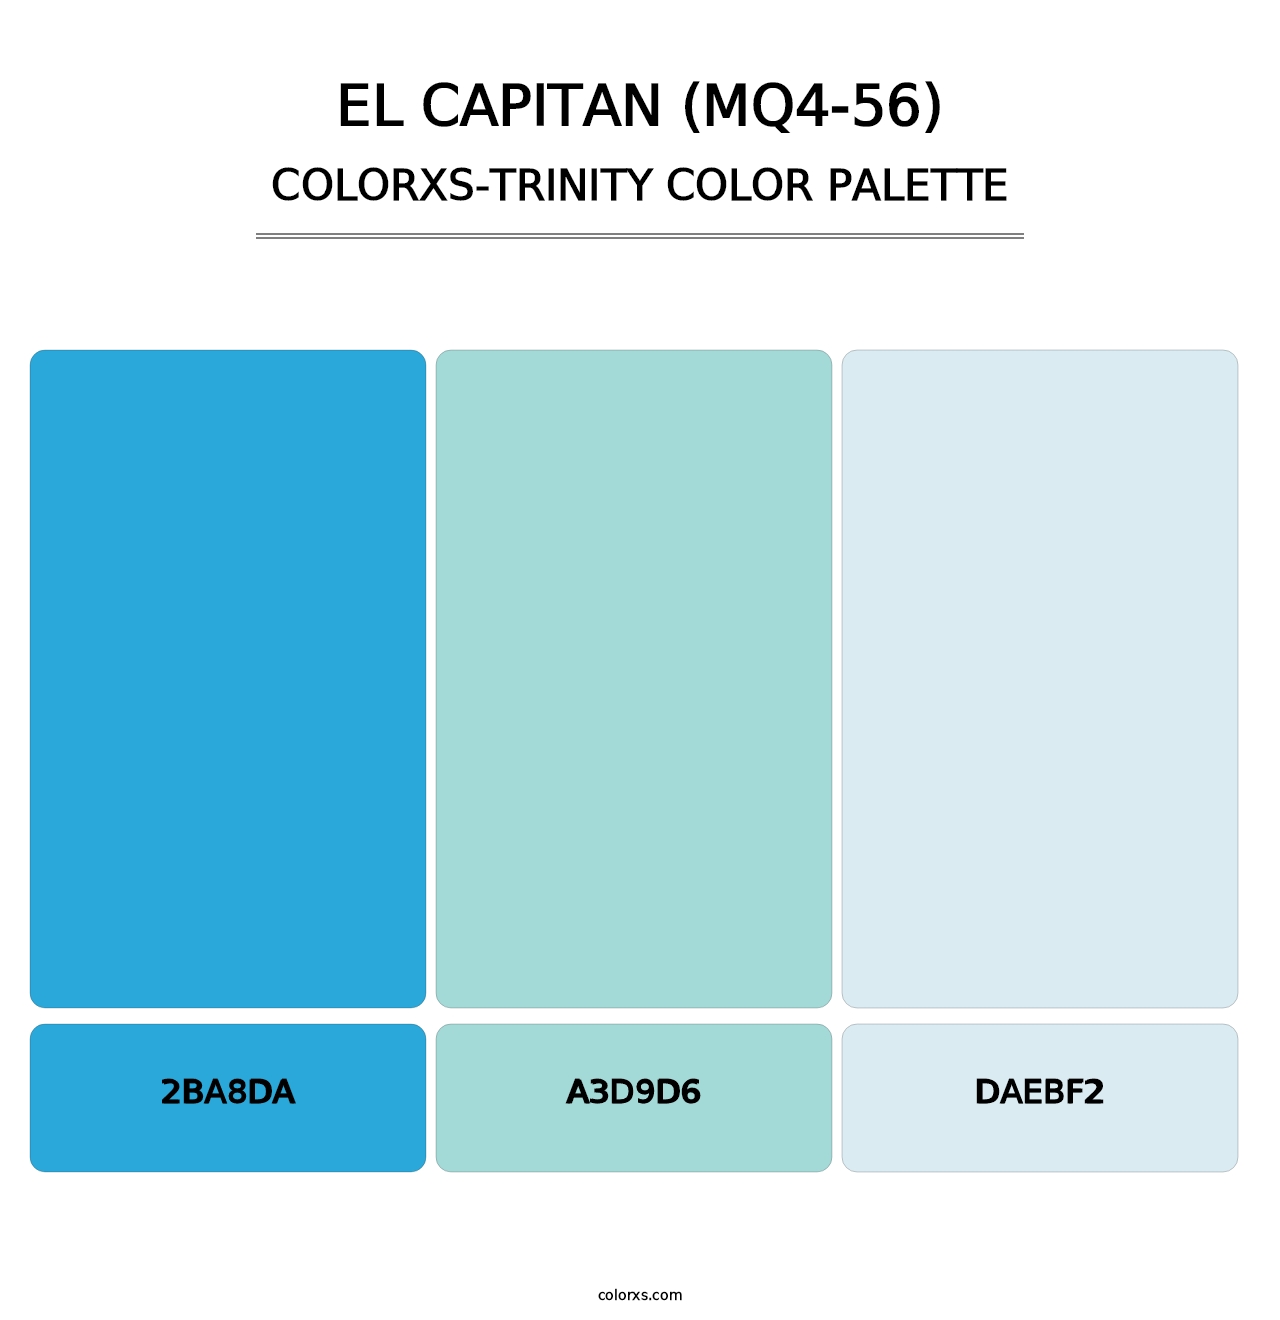 El Capitan (MQ4-56) - Colorxs Trinity Palette